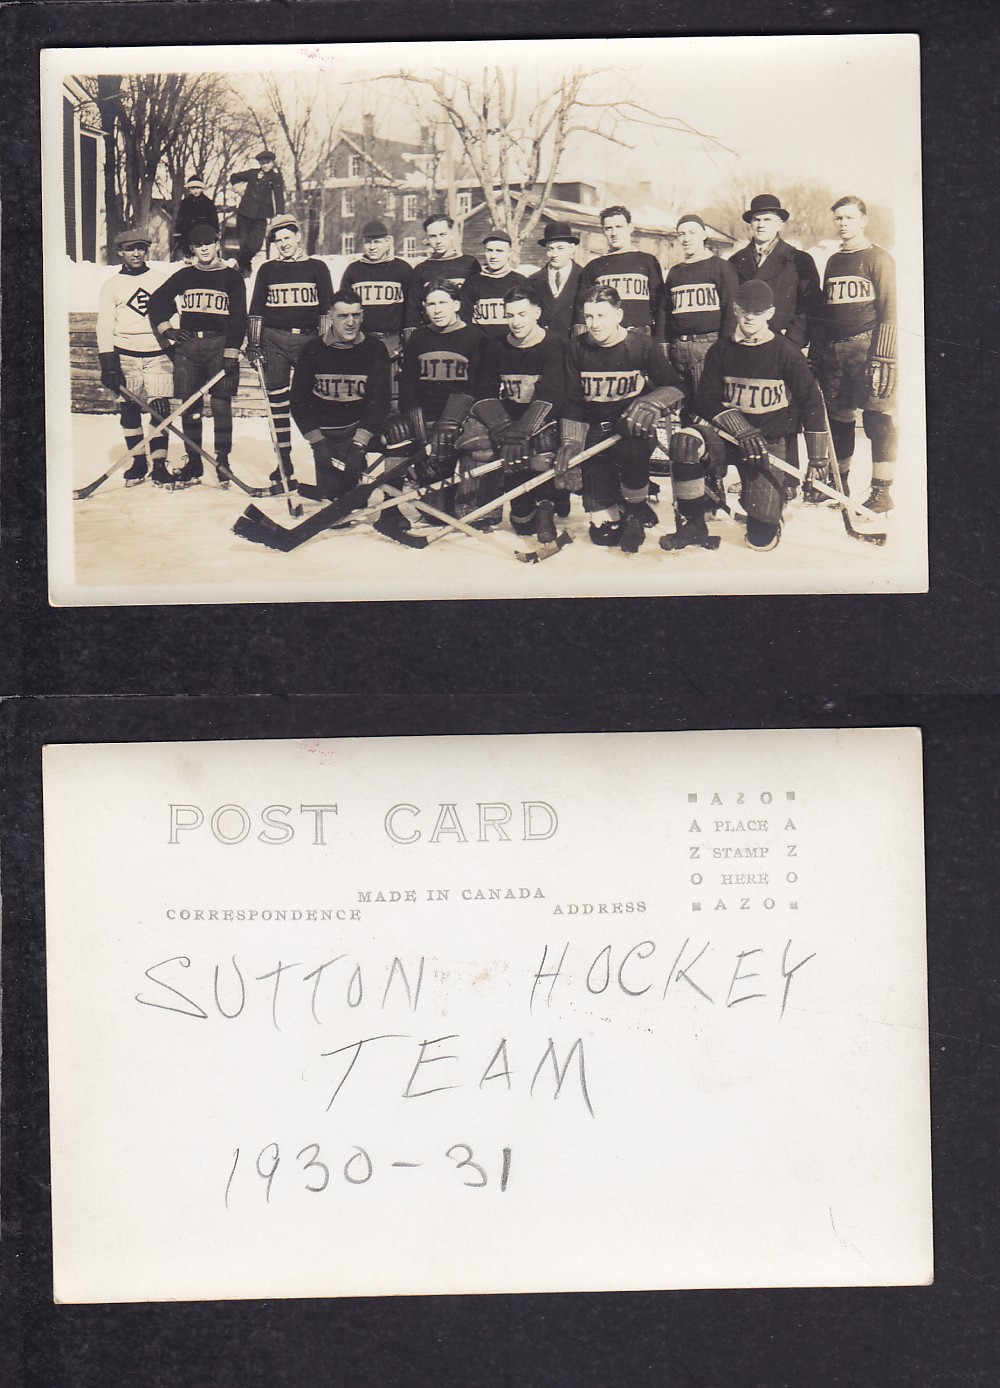 1930-31 SUTTON HOCKEY TEAM POST CARD photo